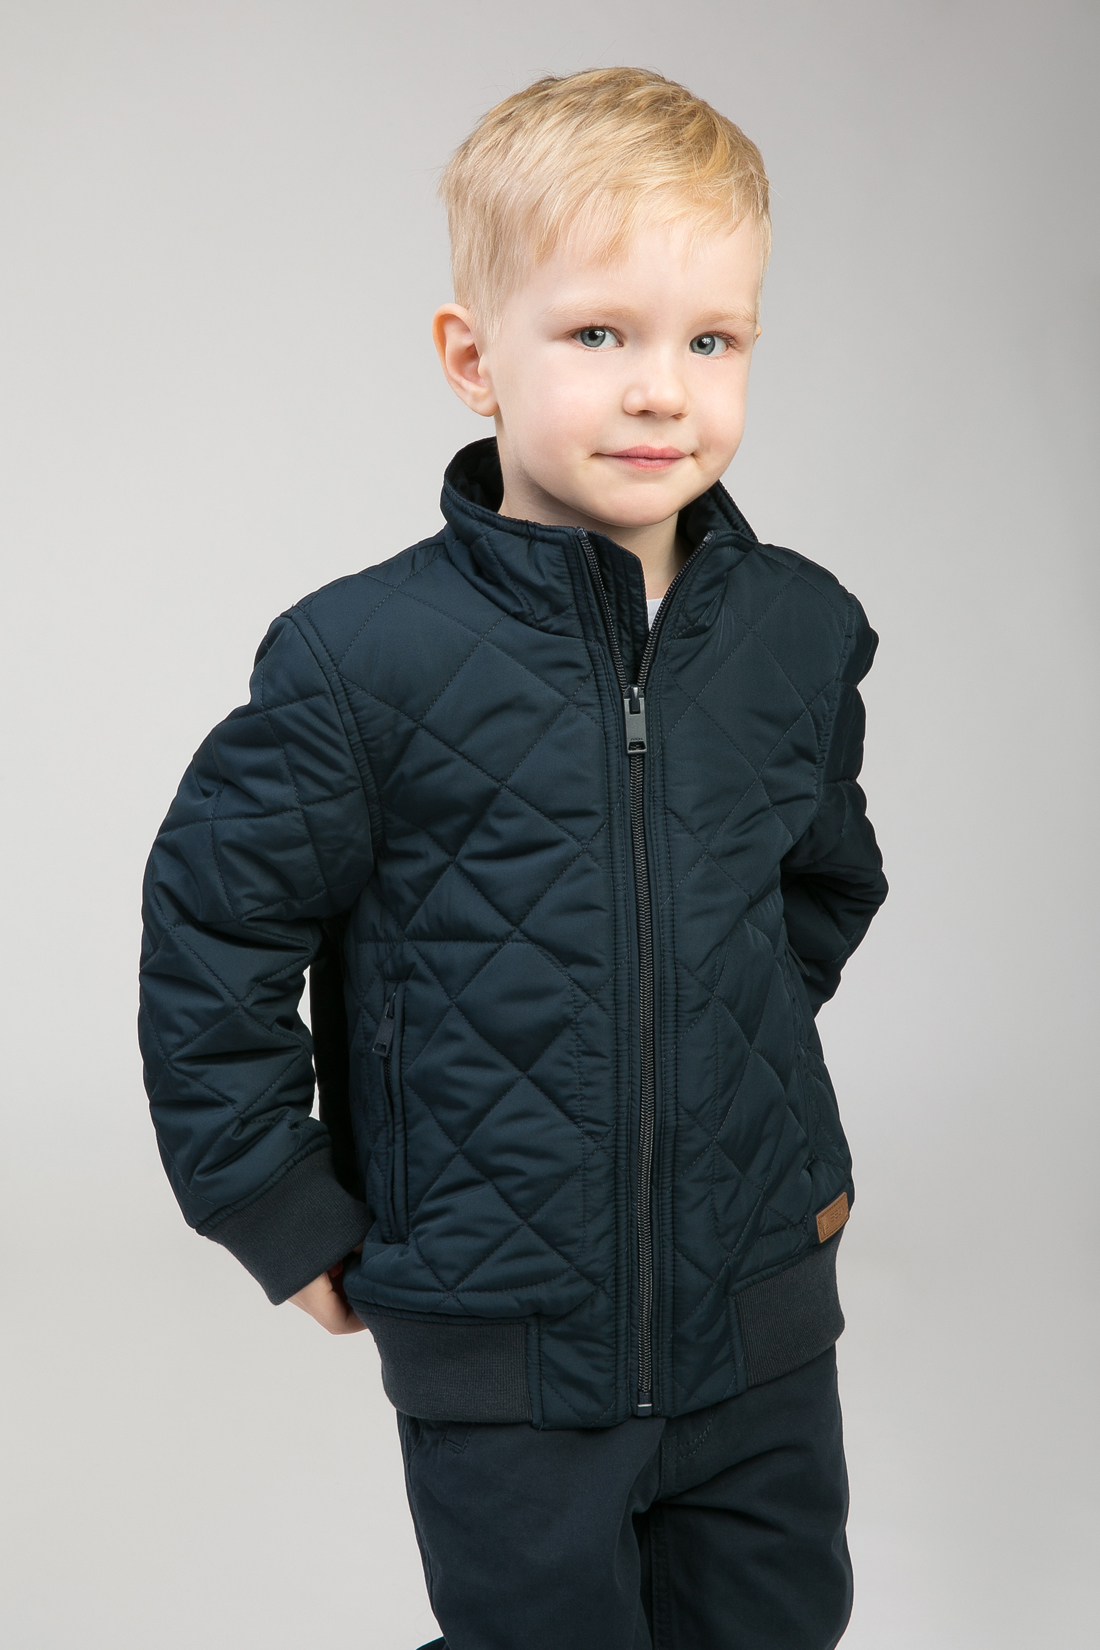 Куртка для мальчика (арт. baon BK538005), размер 98-104, цвет синий Куртка для мальчика (арт. baon BK538005) - фото 1